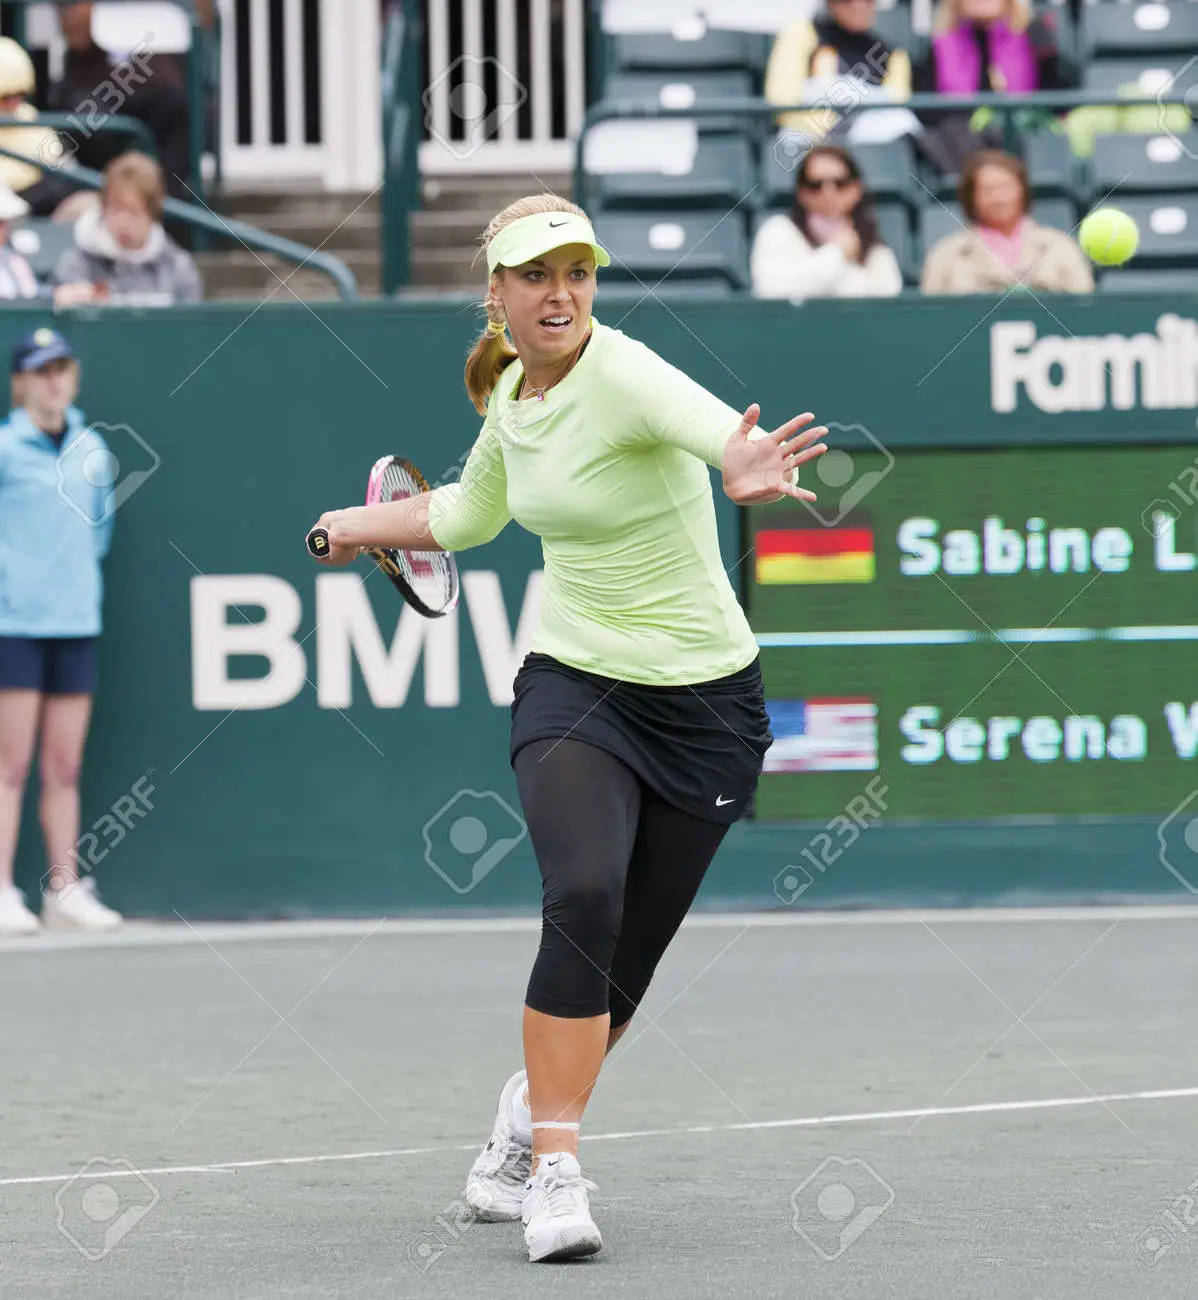 Sabine Lisicki In Action During A Tennis Match Wallpaper